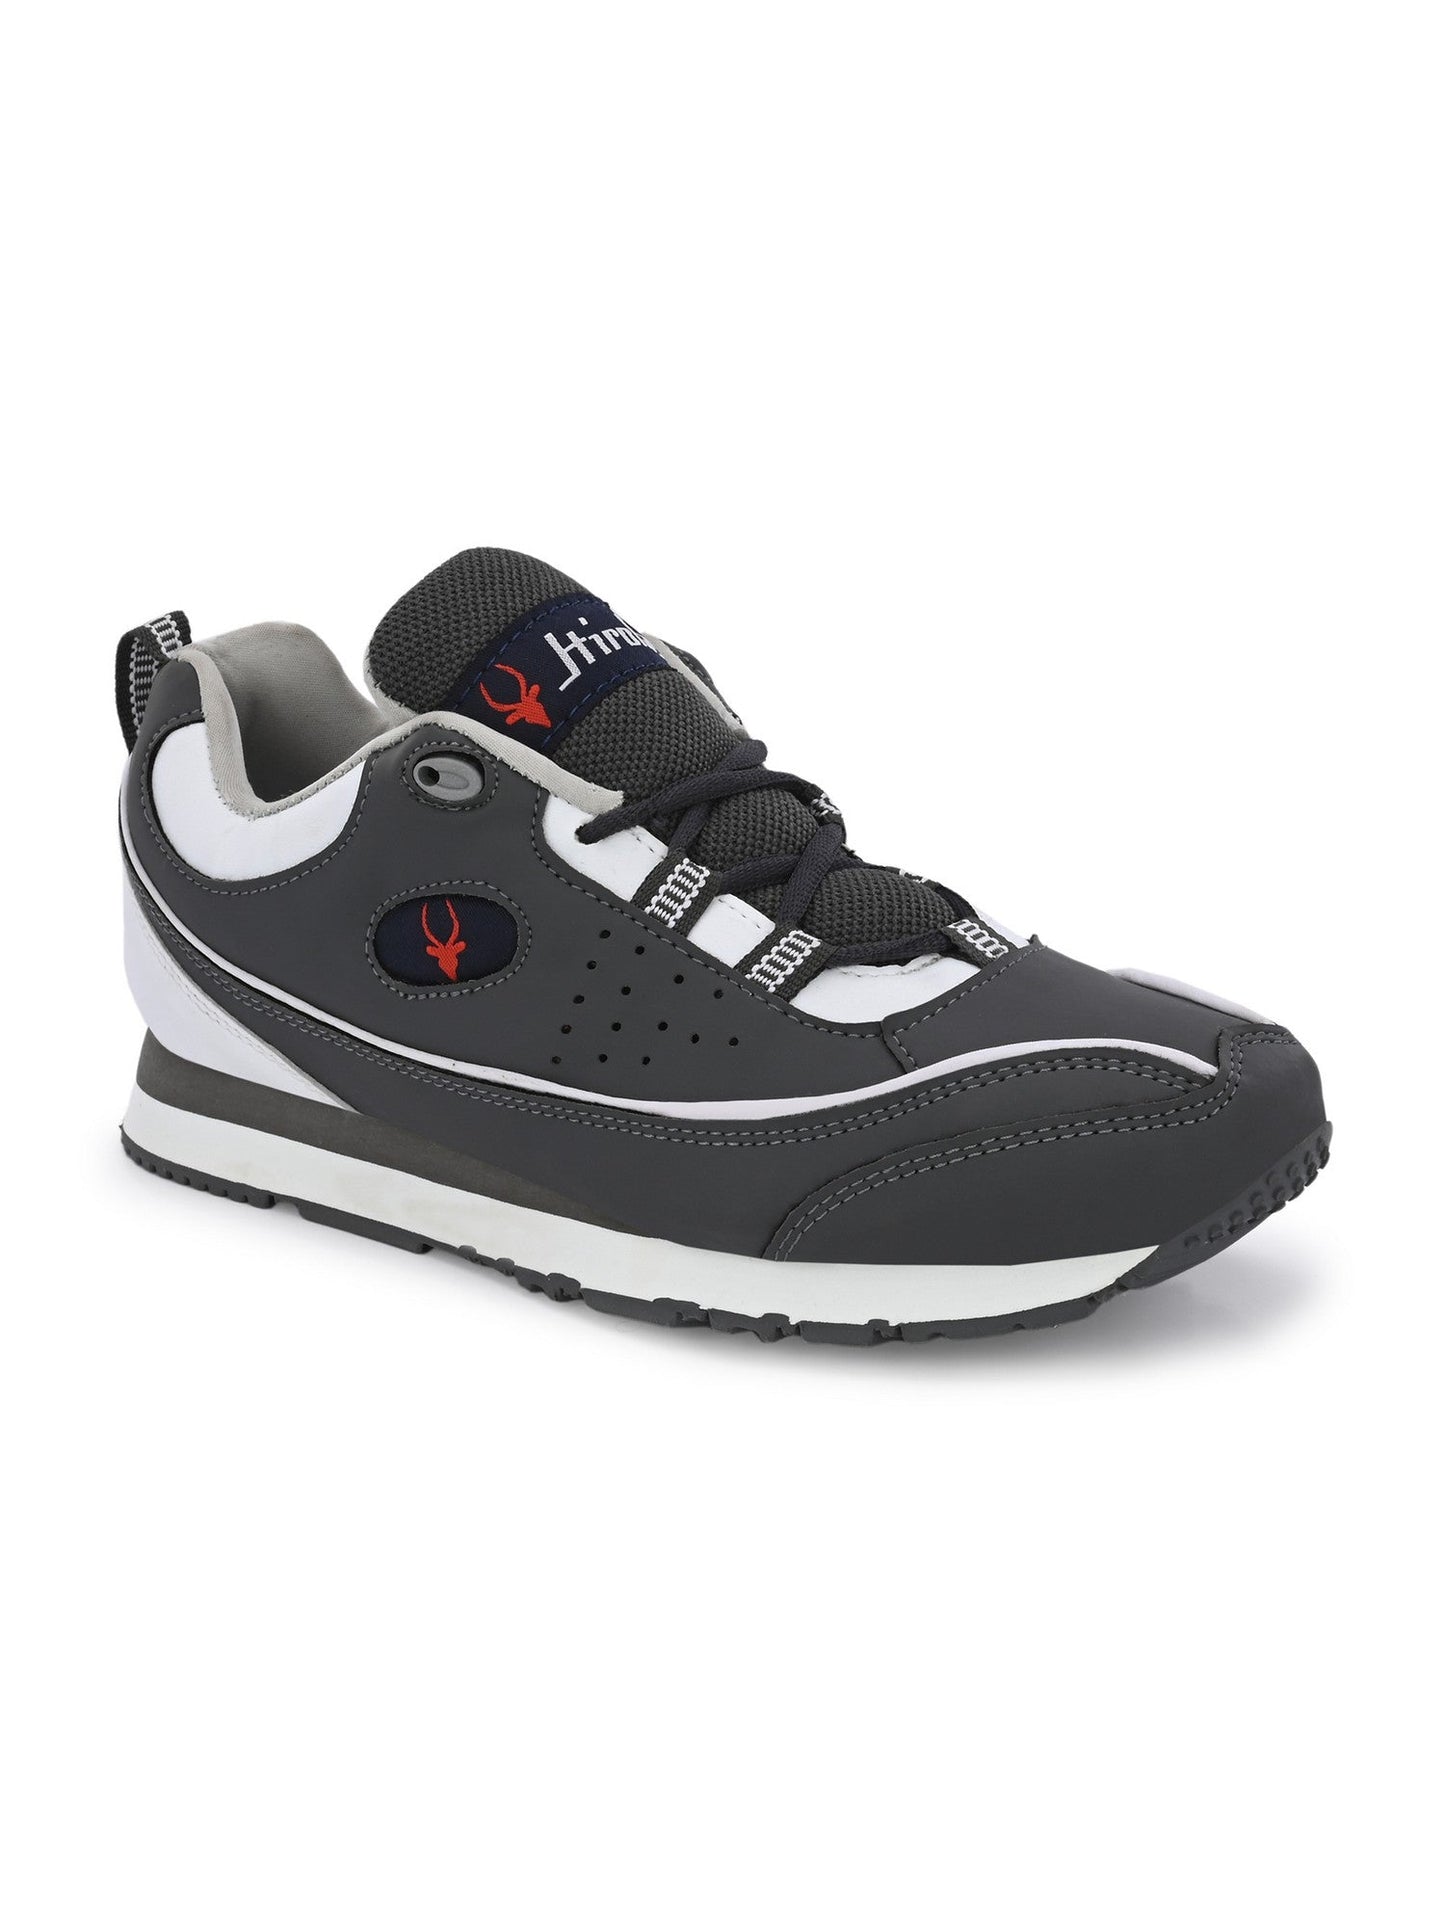 Hirolas® Men's Multisports Shock Absorbing Walking Running Fitness Athletic Training Gym Grey Lace Up Sneaker Sport Shoes (HRL2087G)